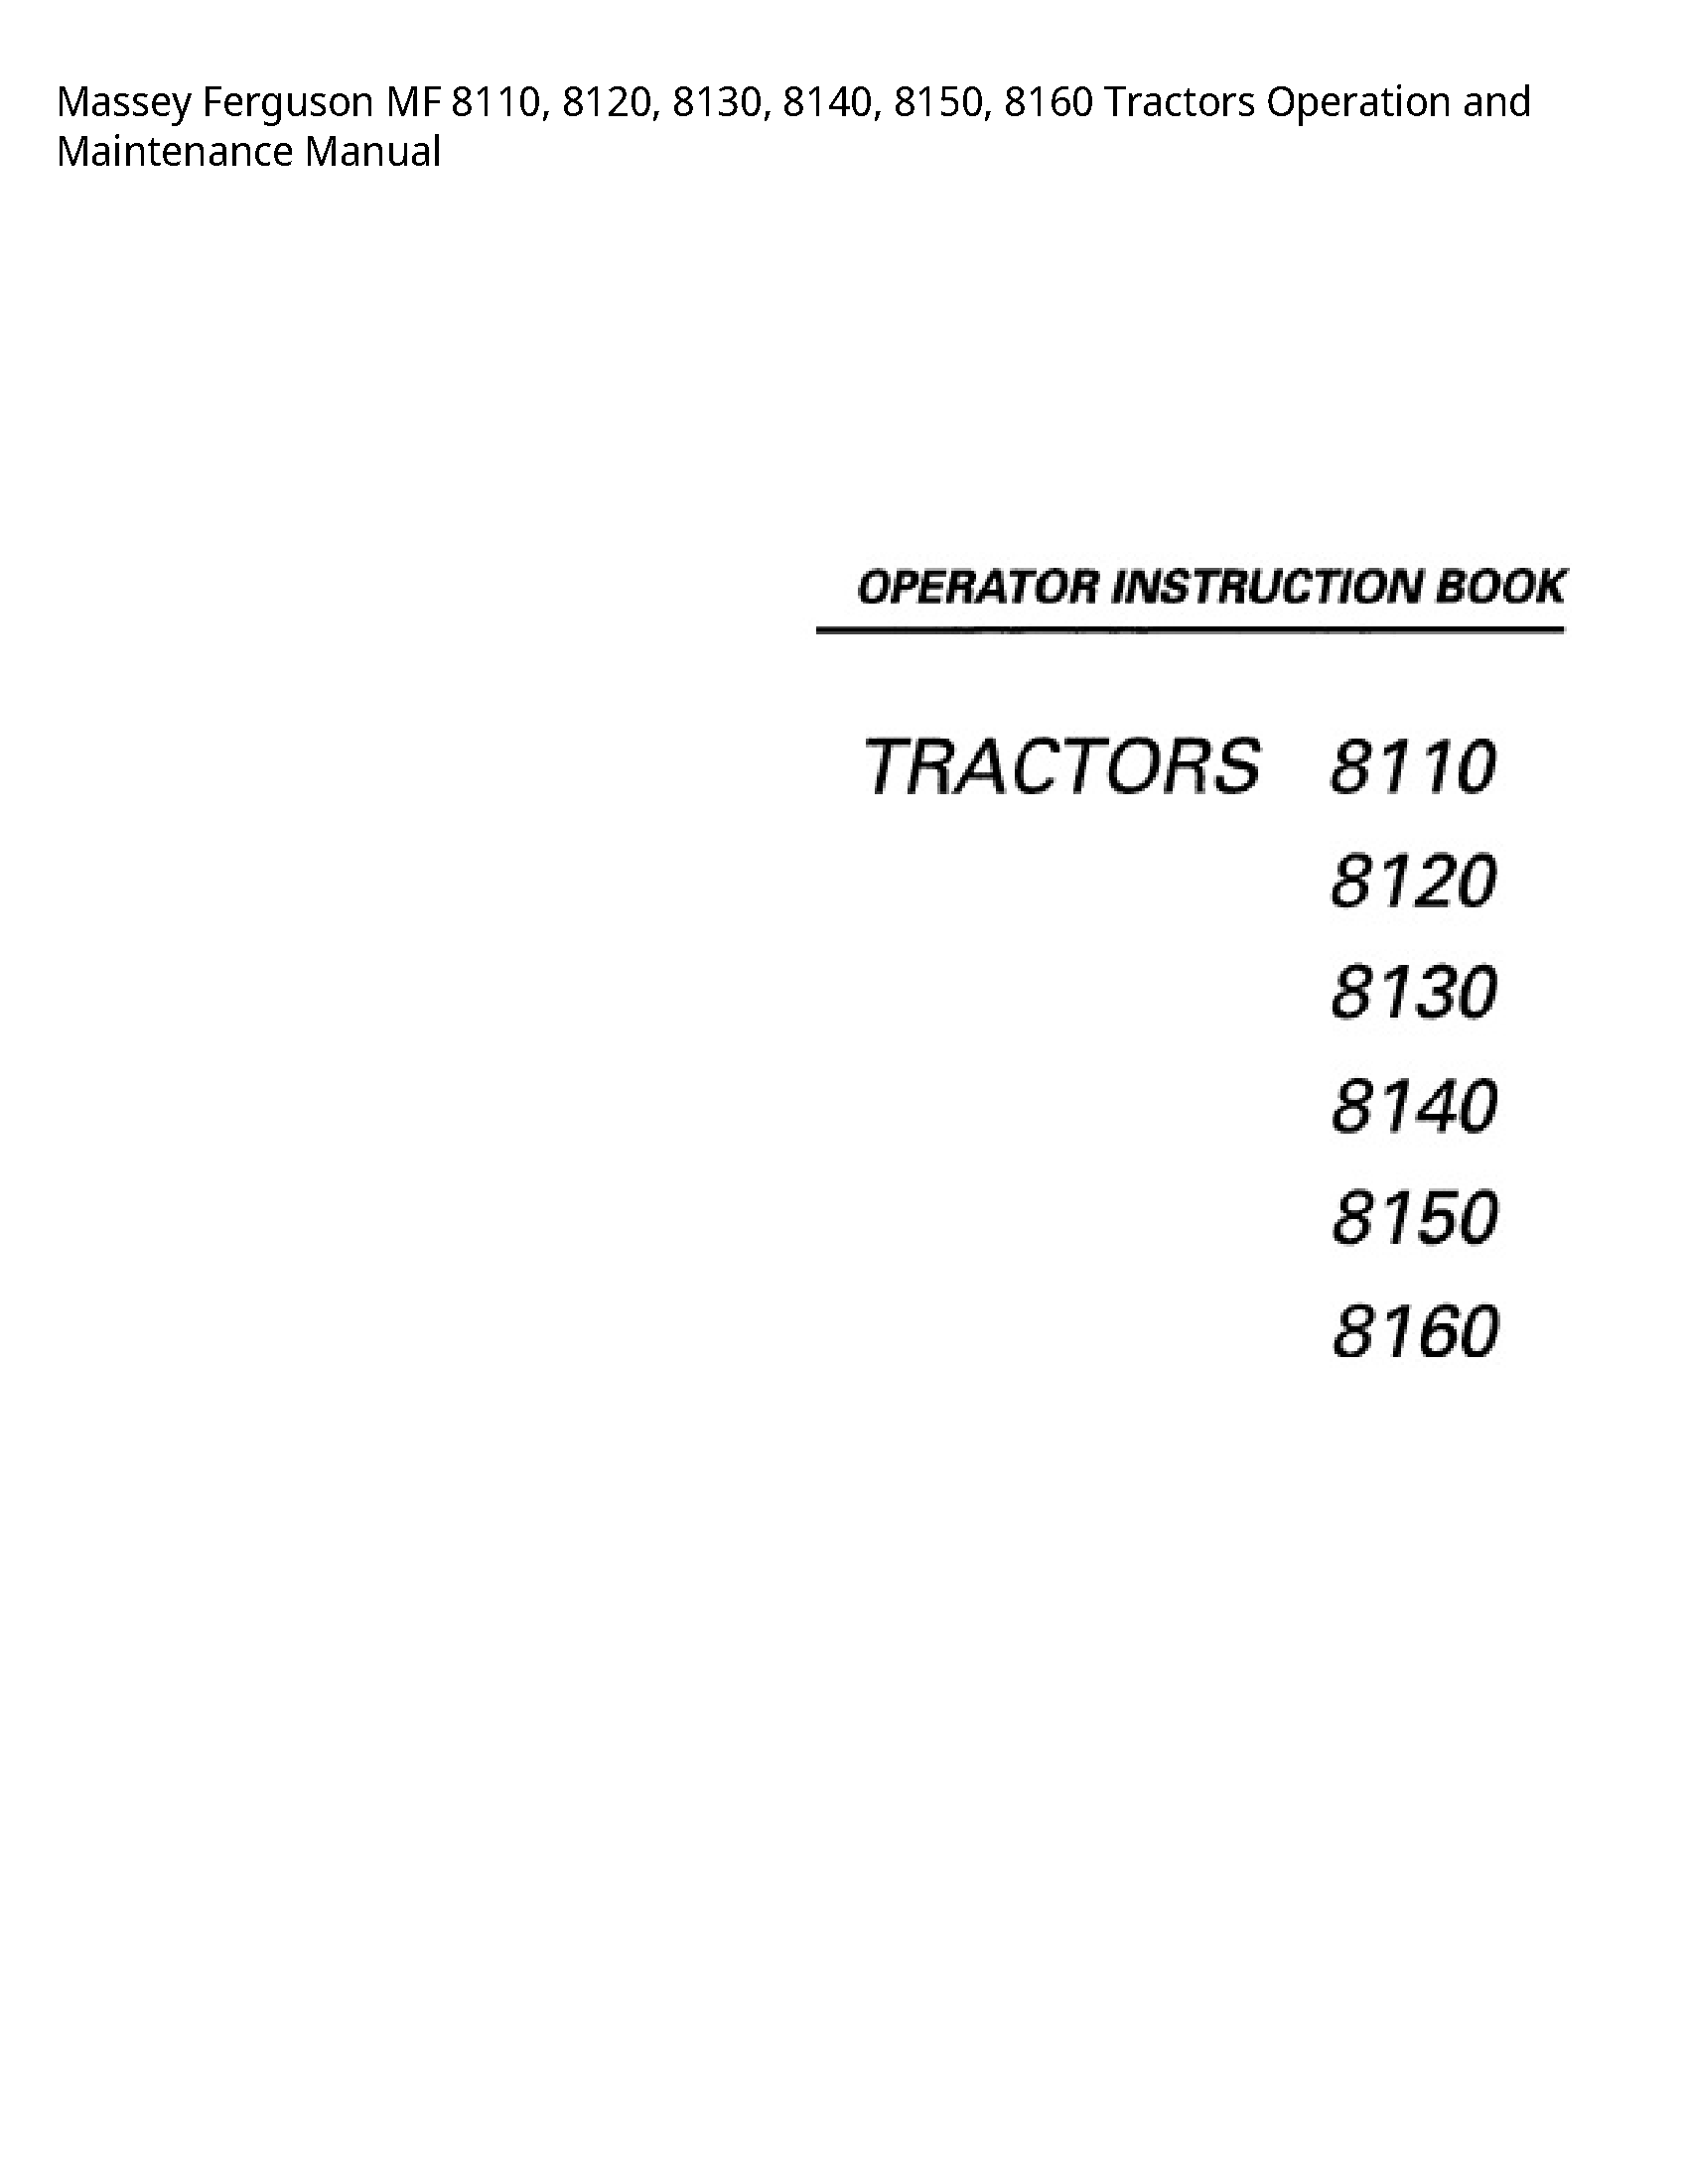 Massey Ferguson 8110 MF Tractors Operation  Maintenance manual